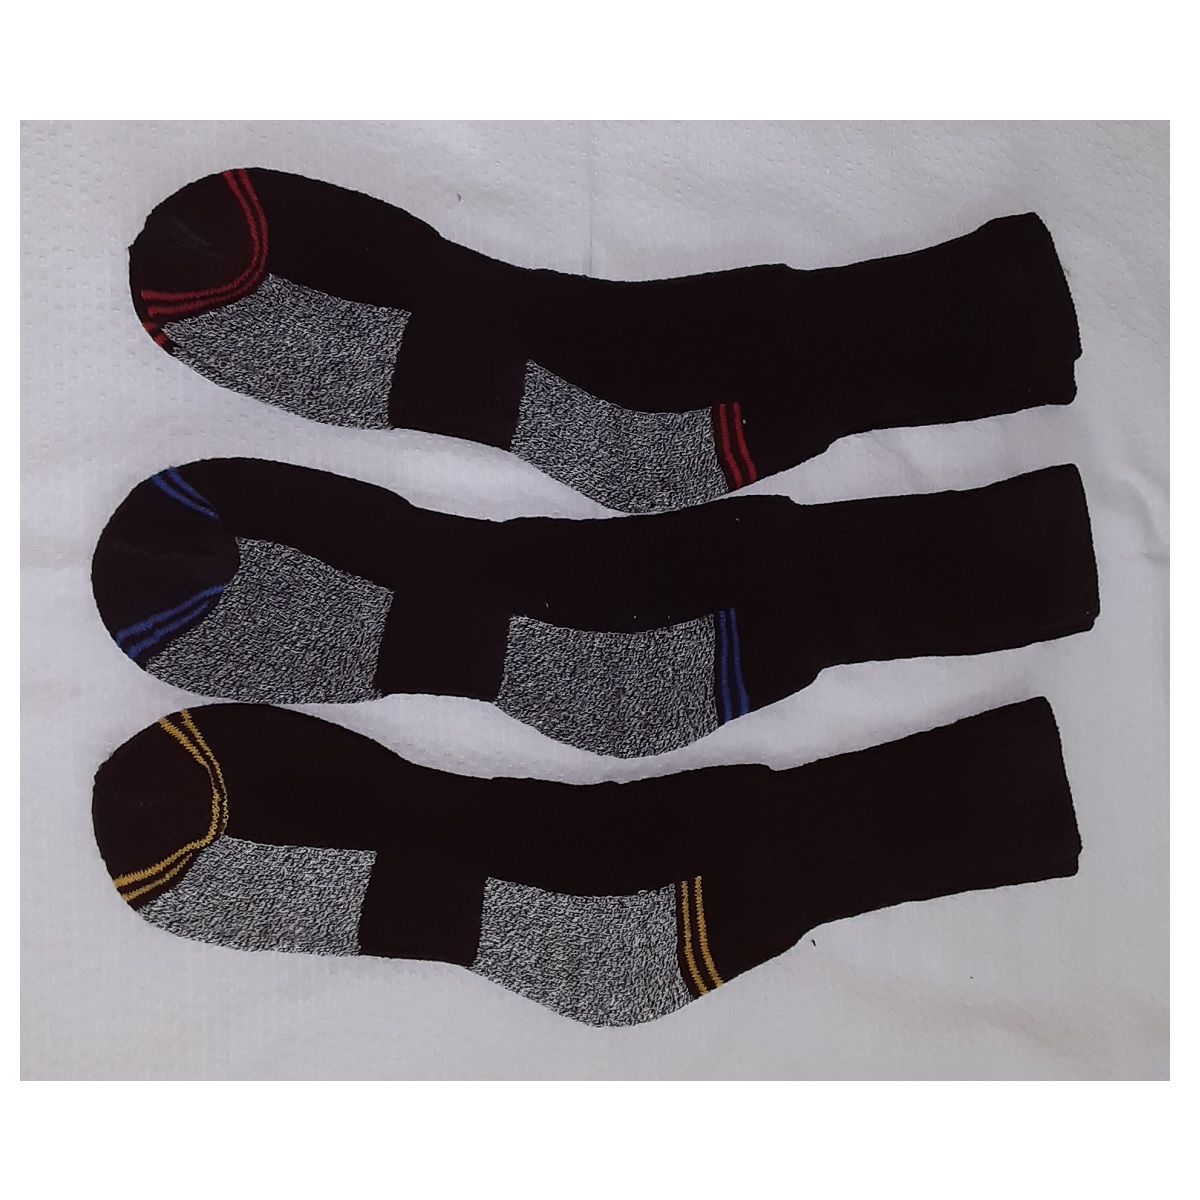 Premium Diabetic Work Wear Socks - assorted colors